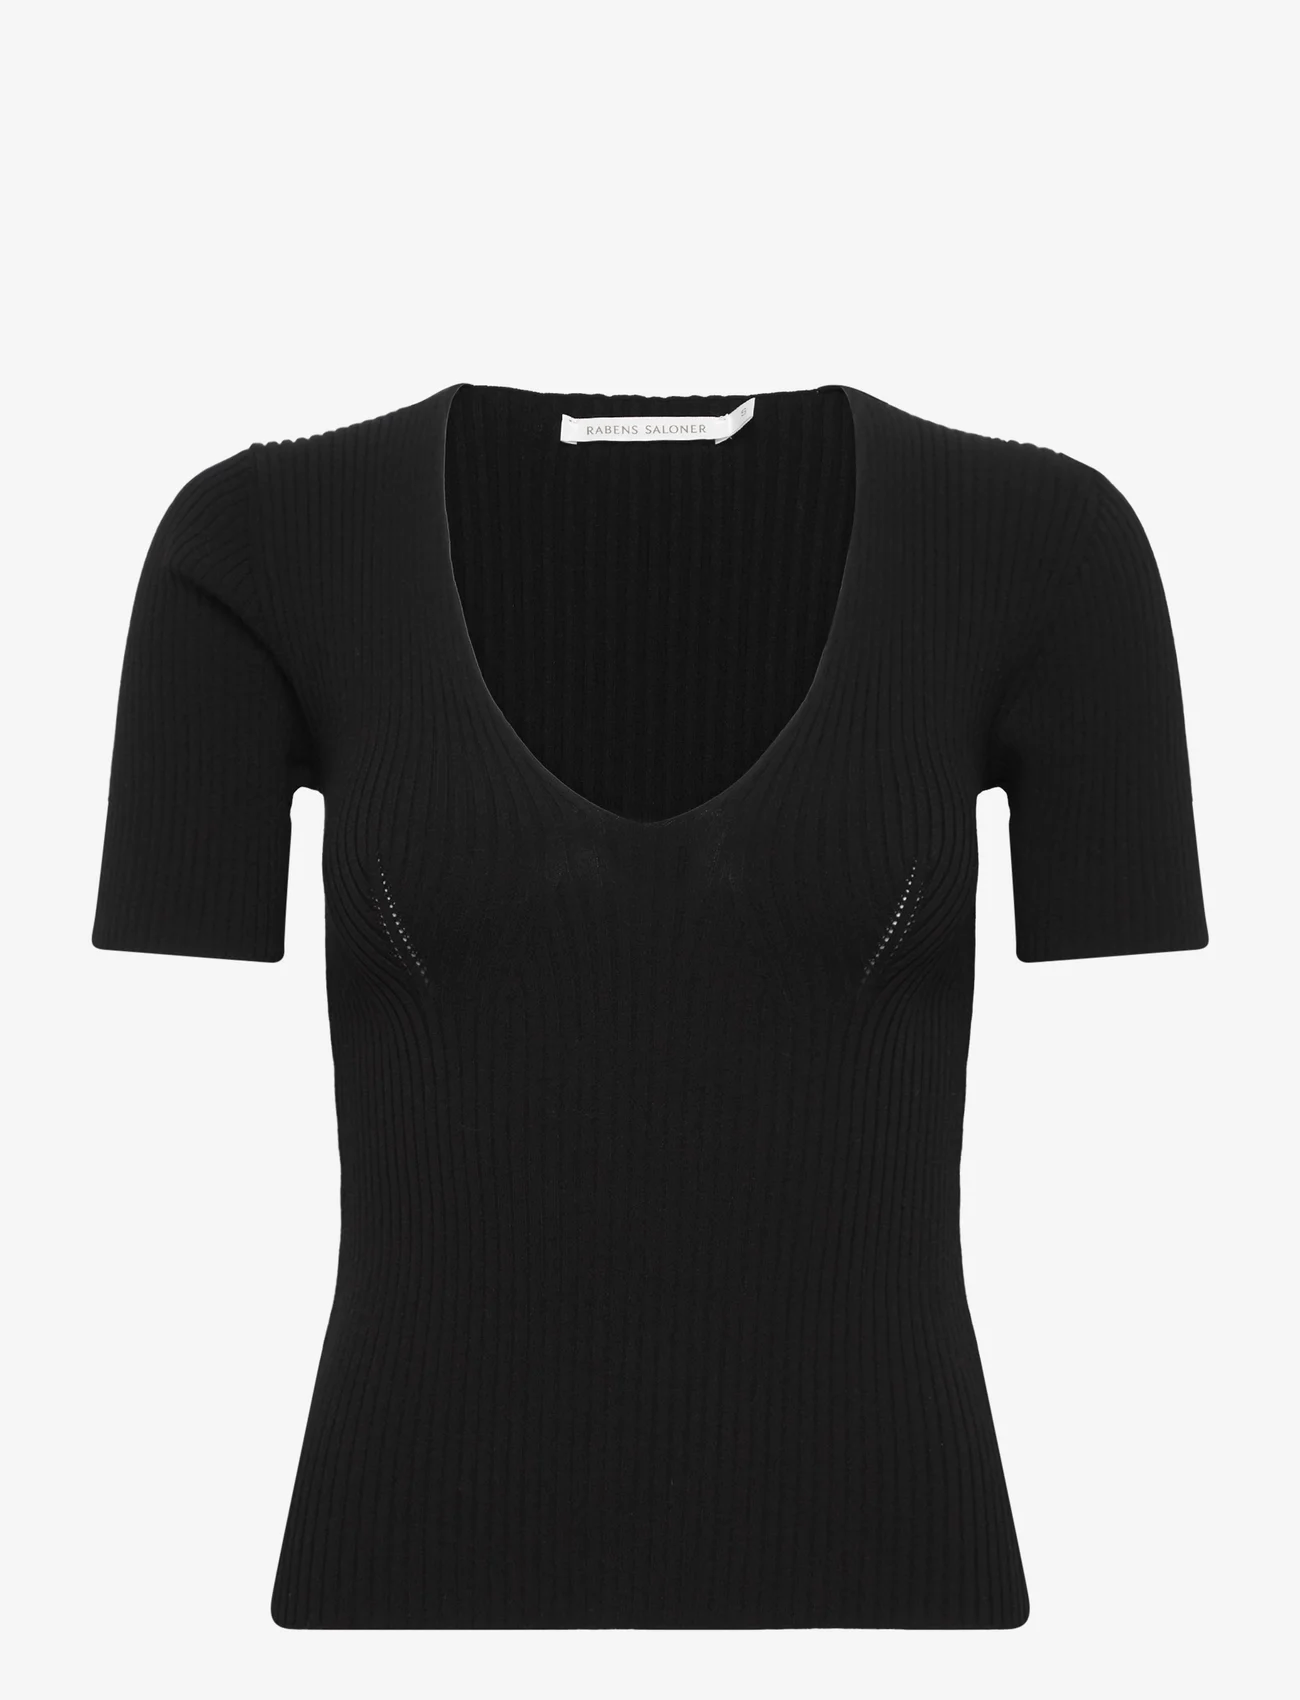 Rabens Saloner - Fabia - Contour knit short slv. top - t-shirts - black - 0